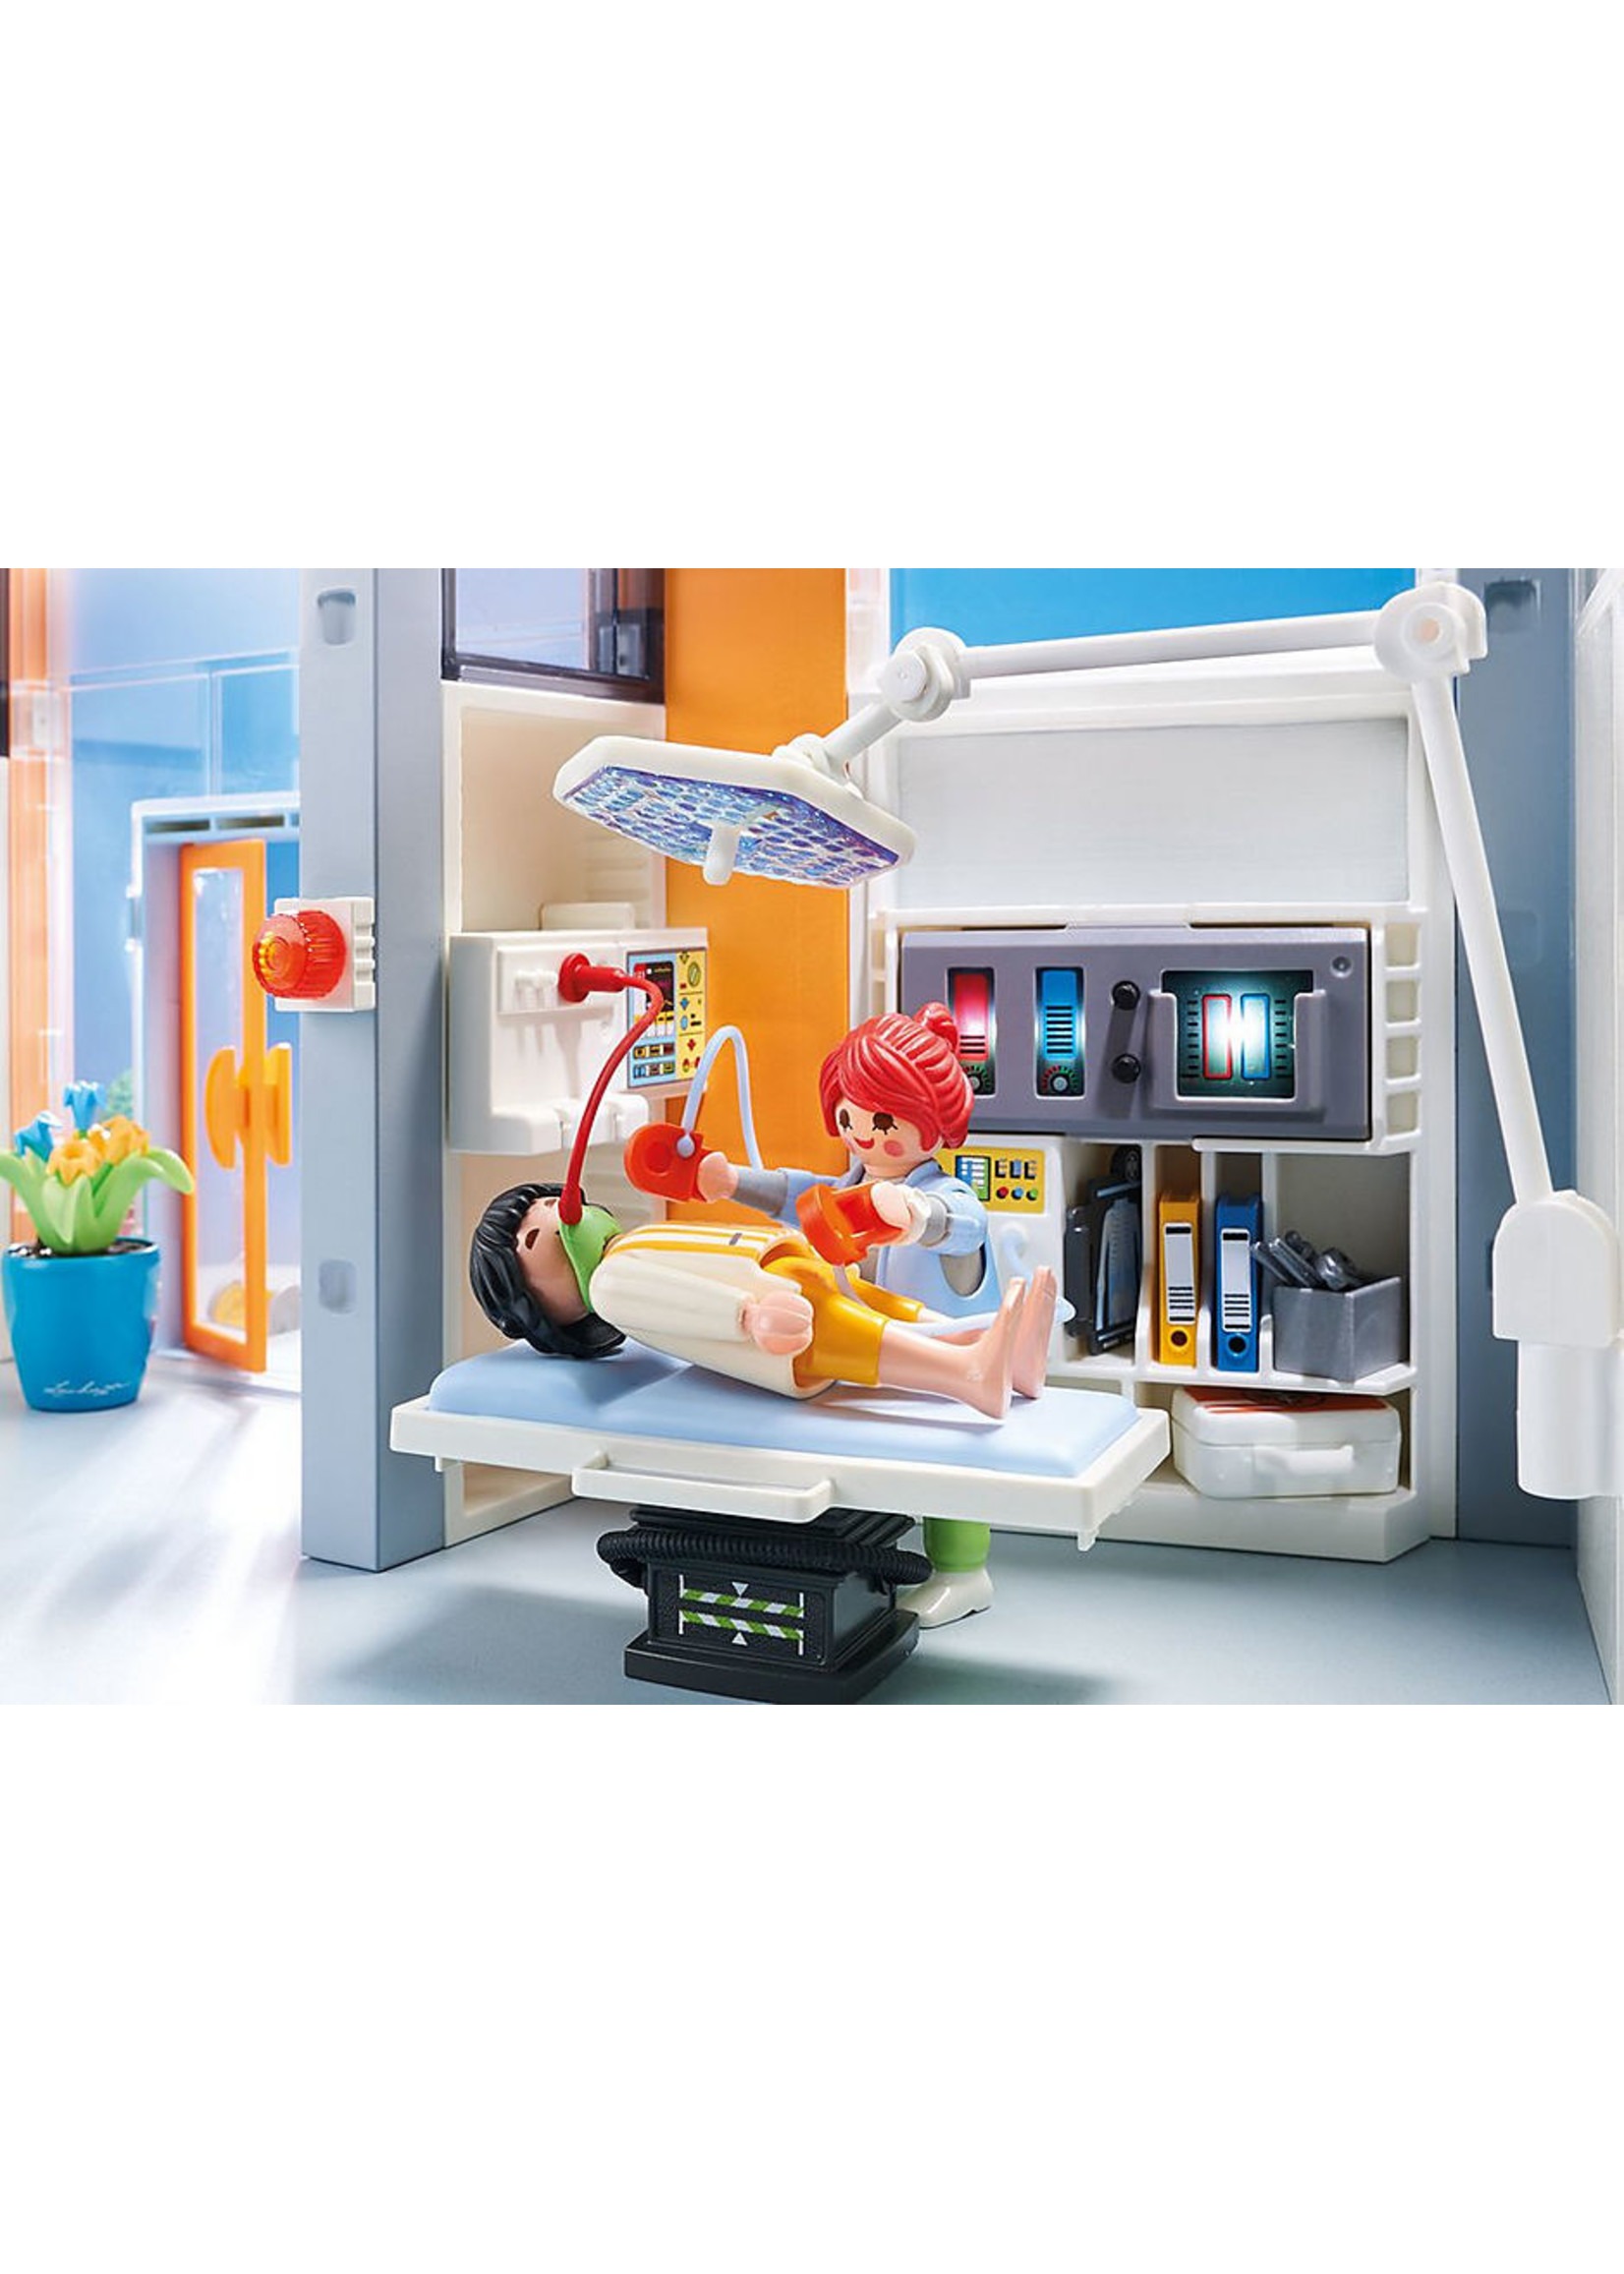 Playmobil 70190 - Large Hospital